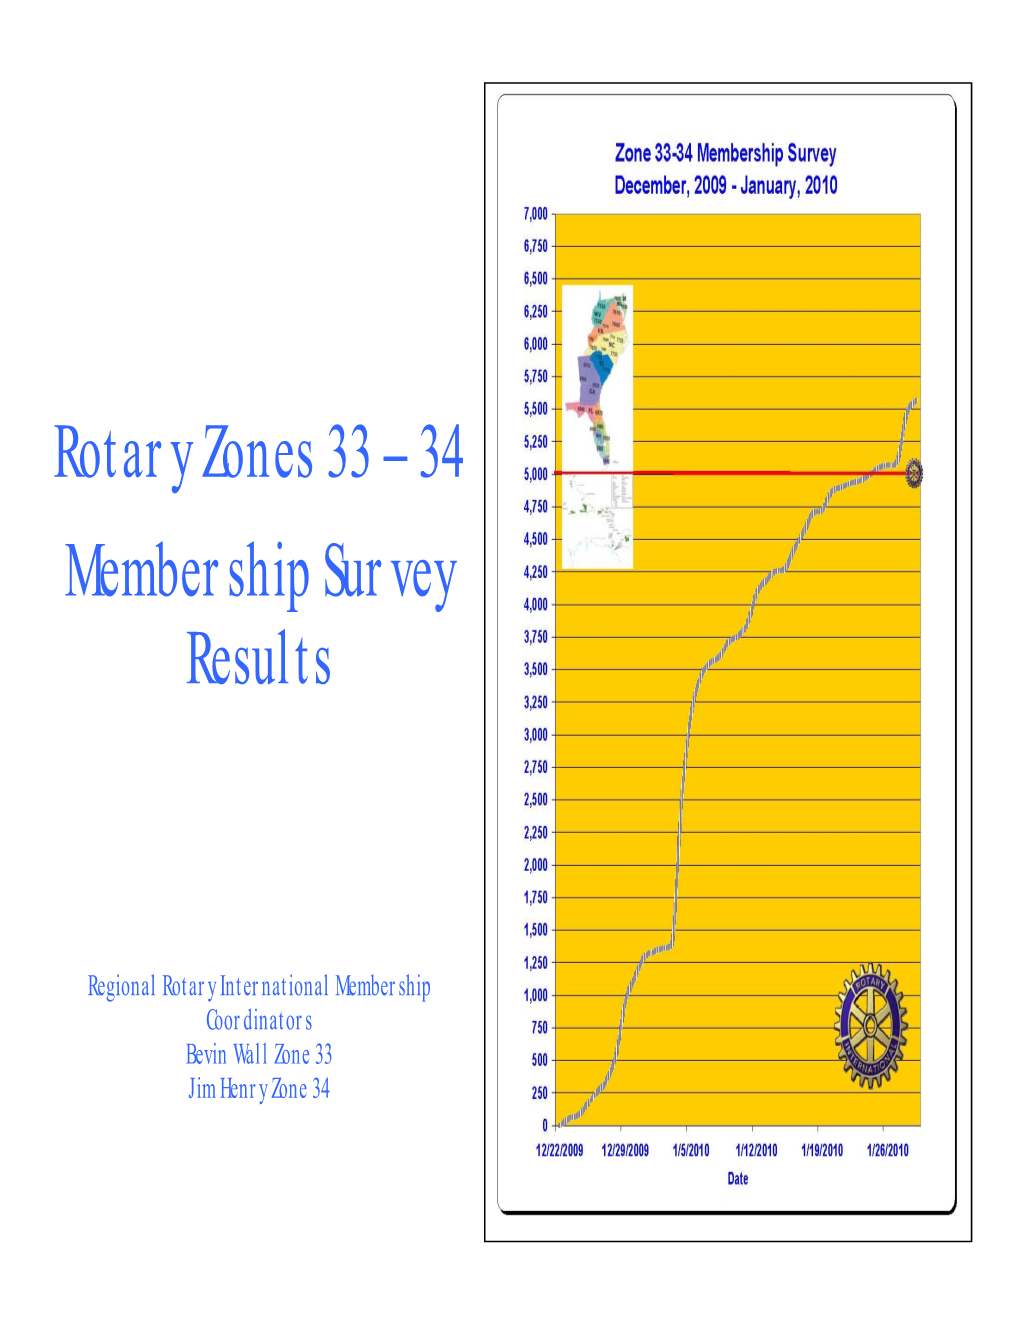 Rotary Zones 33 – 34 Membership Survey Results